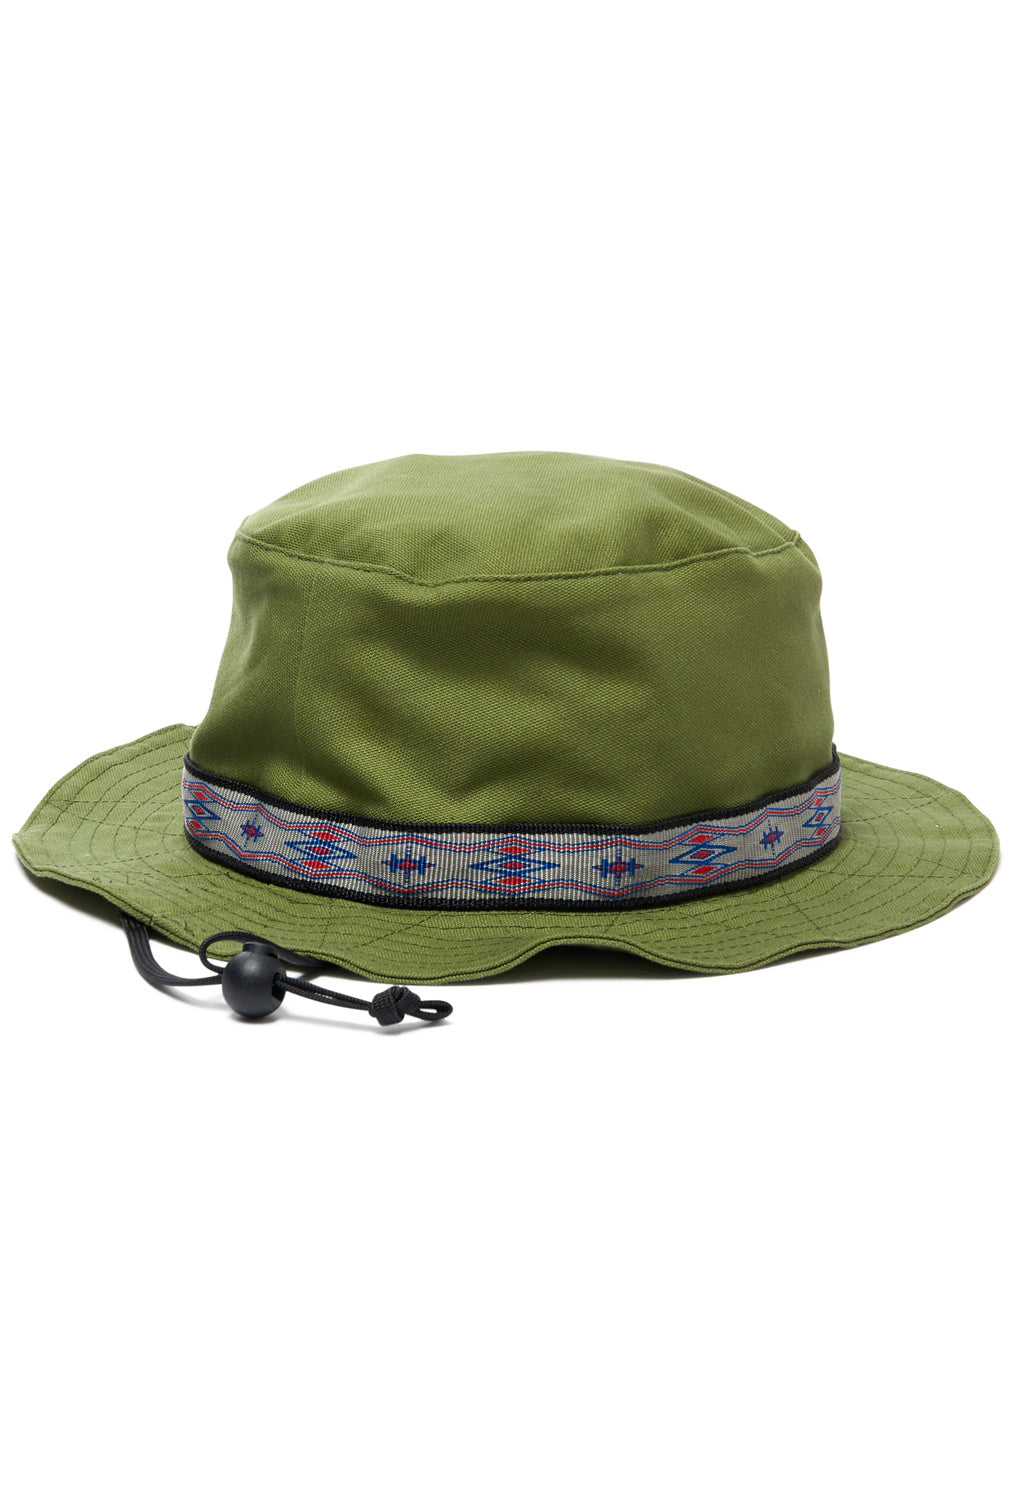 KAVU Organic Strap Bucket Hat - Fern